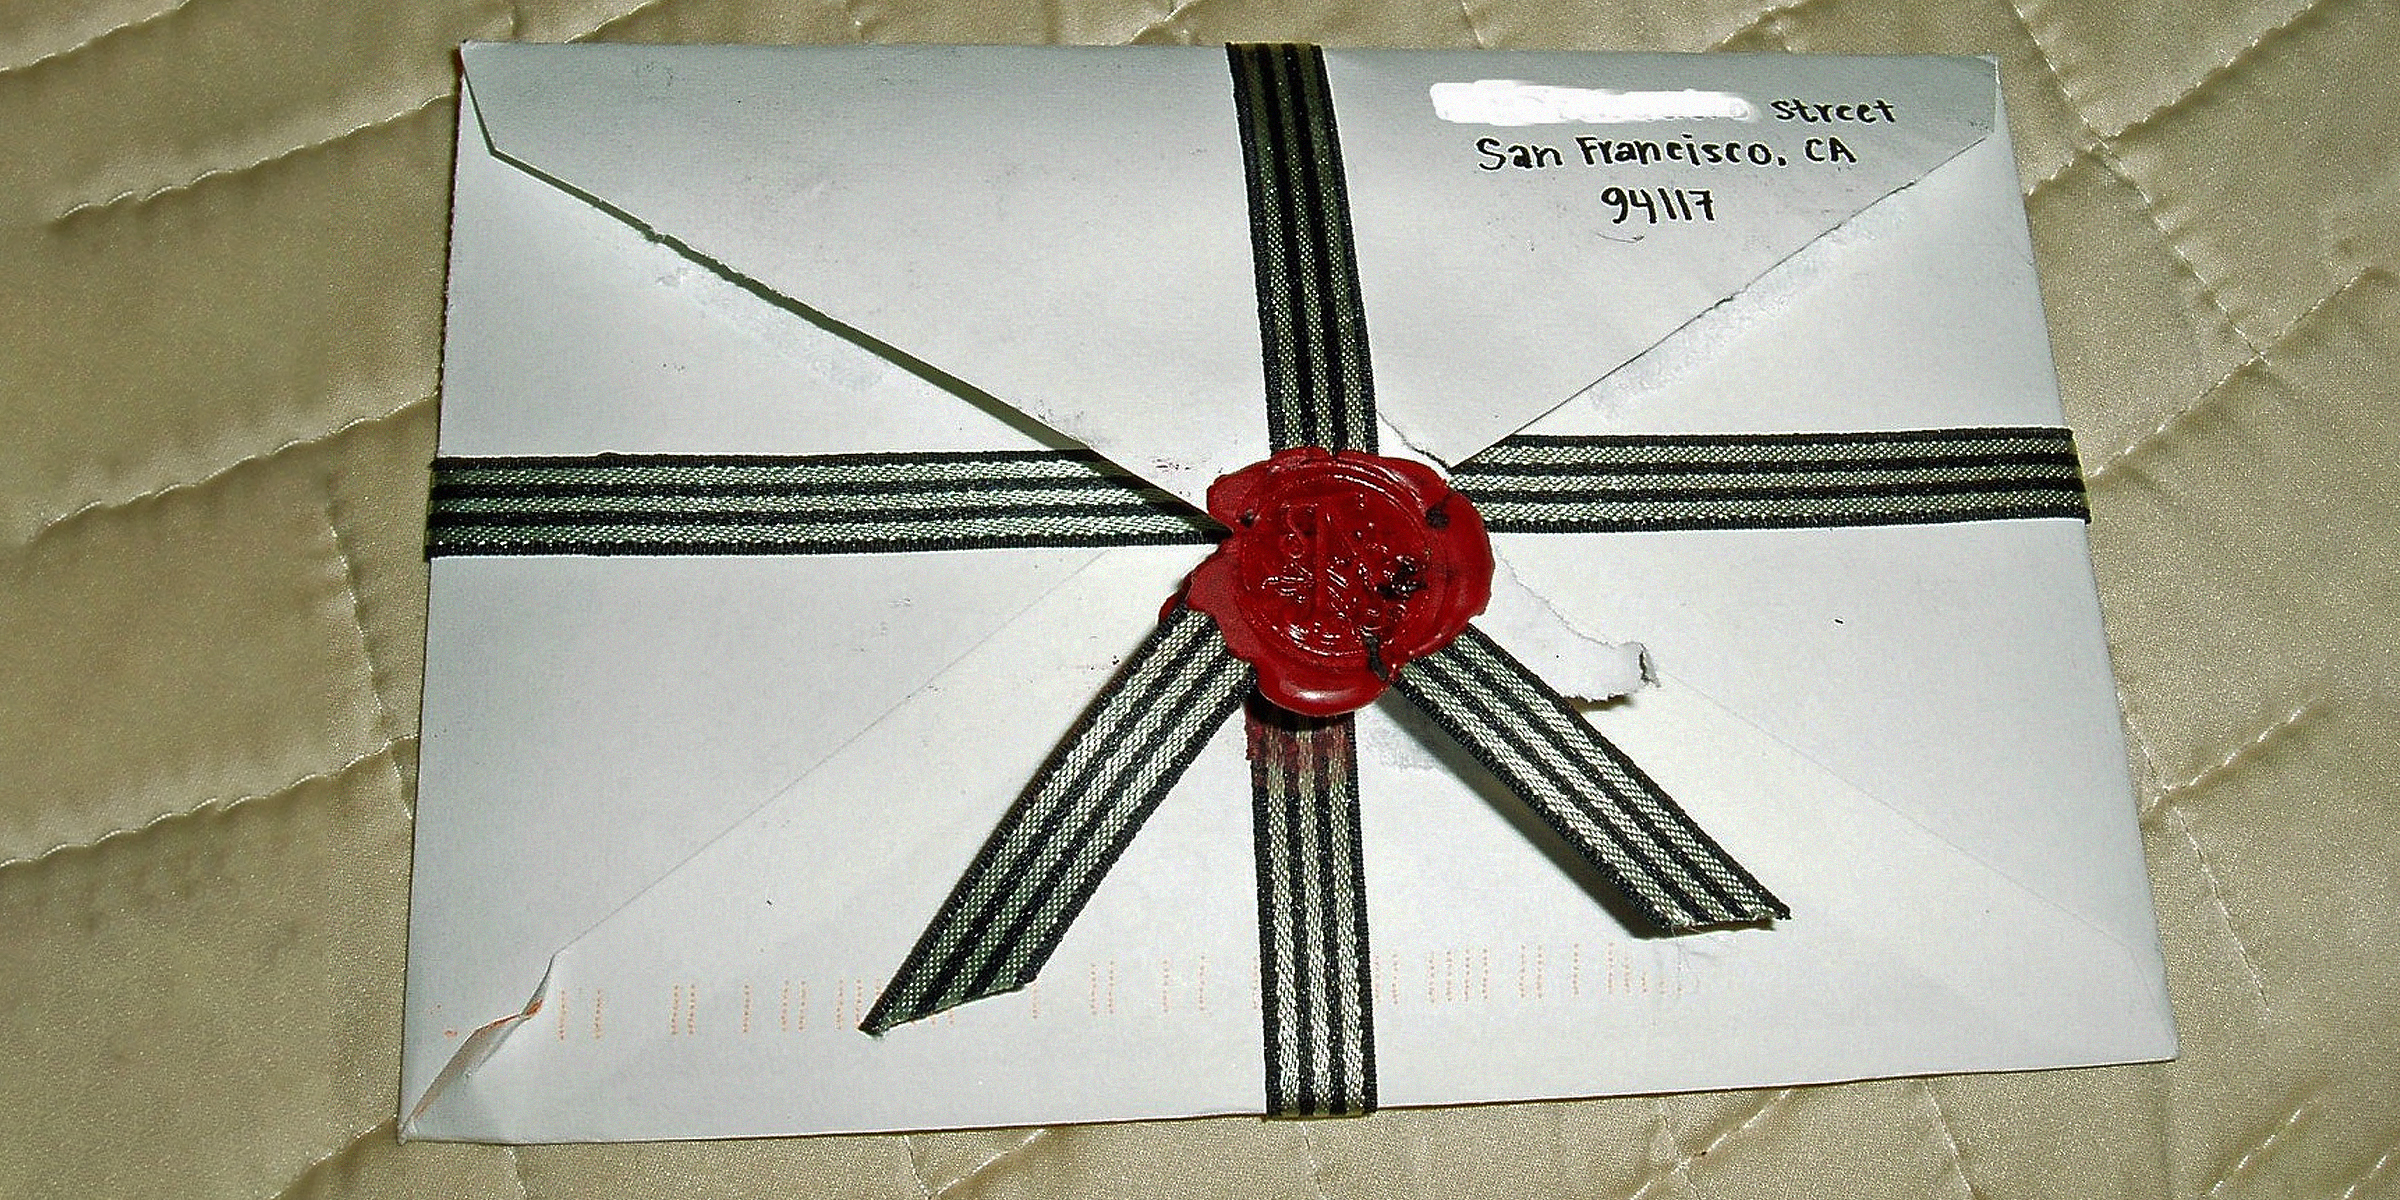 A white envelope | Source: Flickr